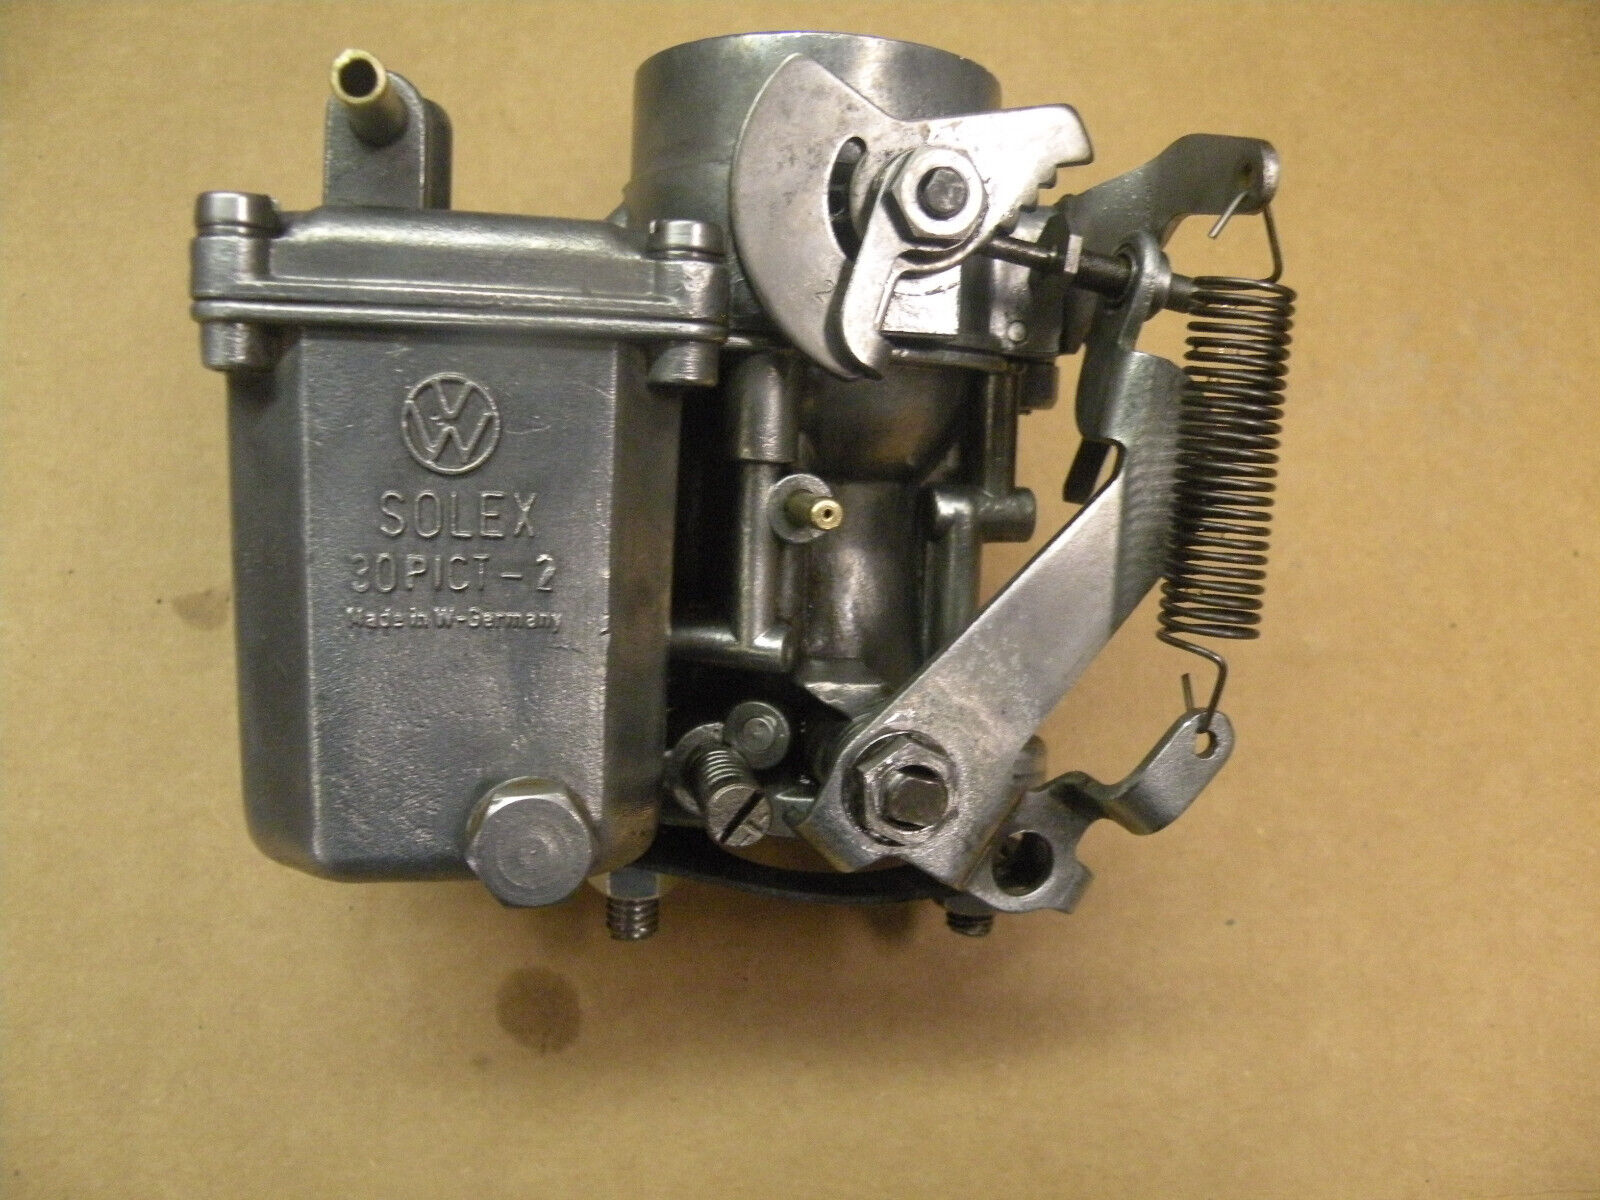 USED 1967-70 VW Beetle Solex 30 PICT-2 Carburetor